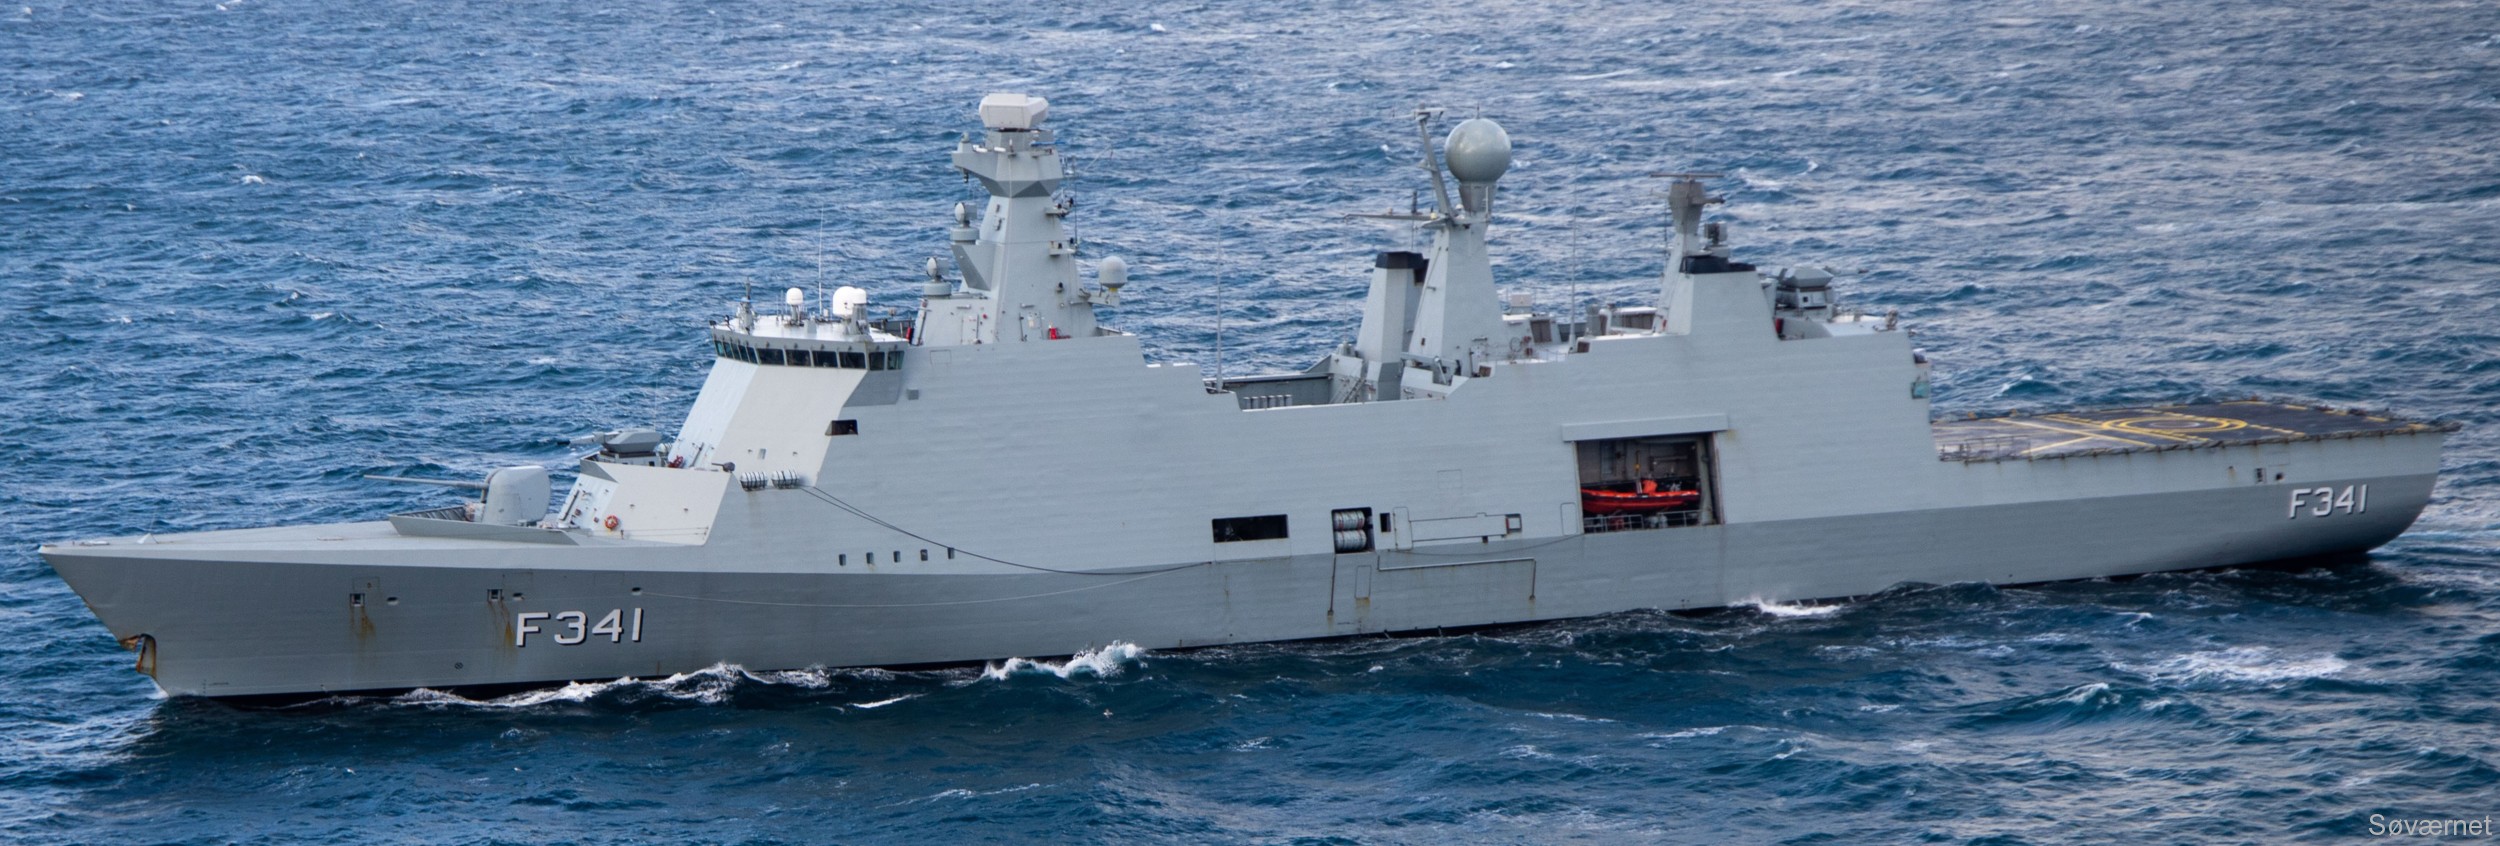 f-341 hdms absalon frigate royal danish navy 04